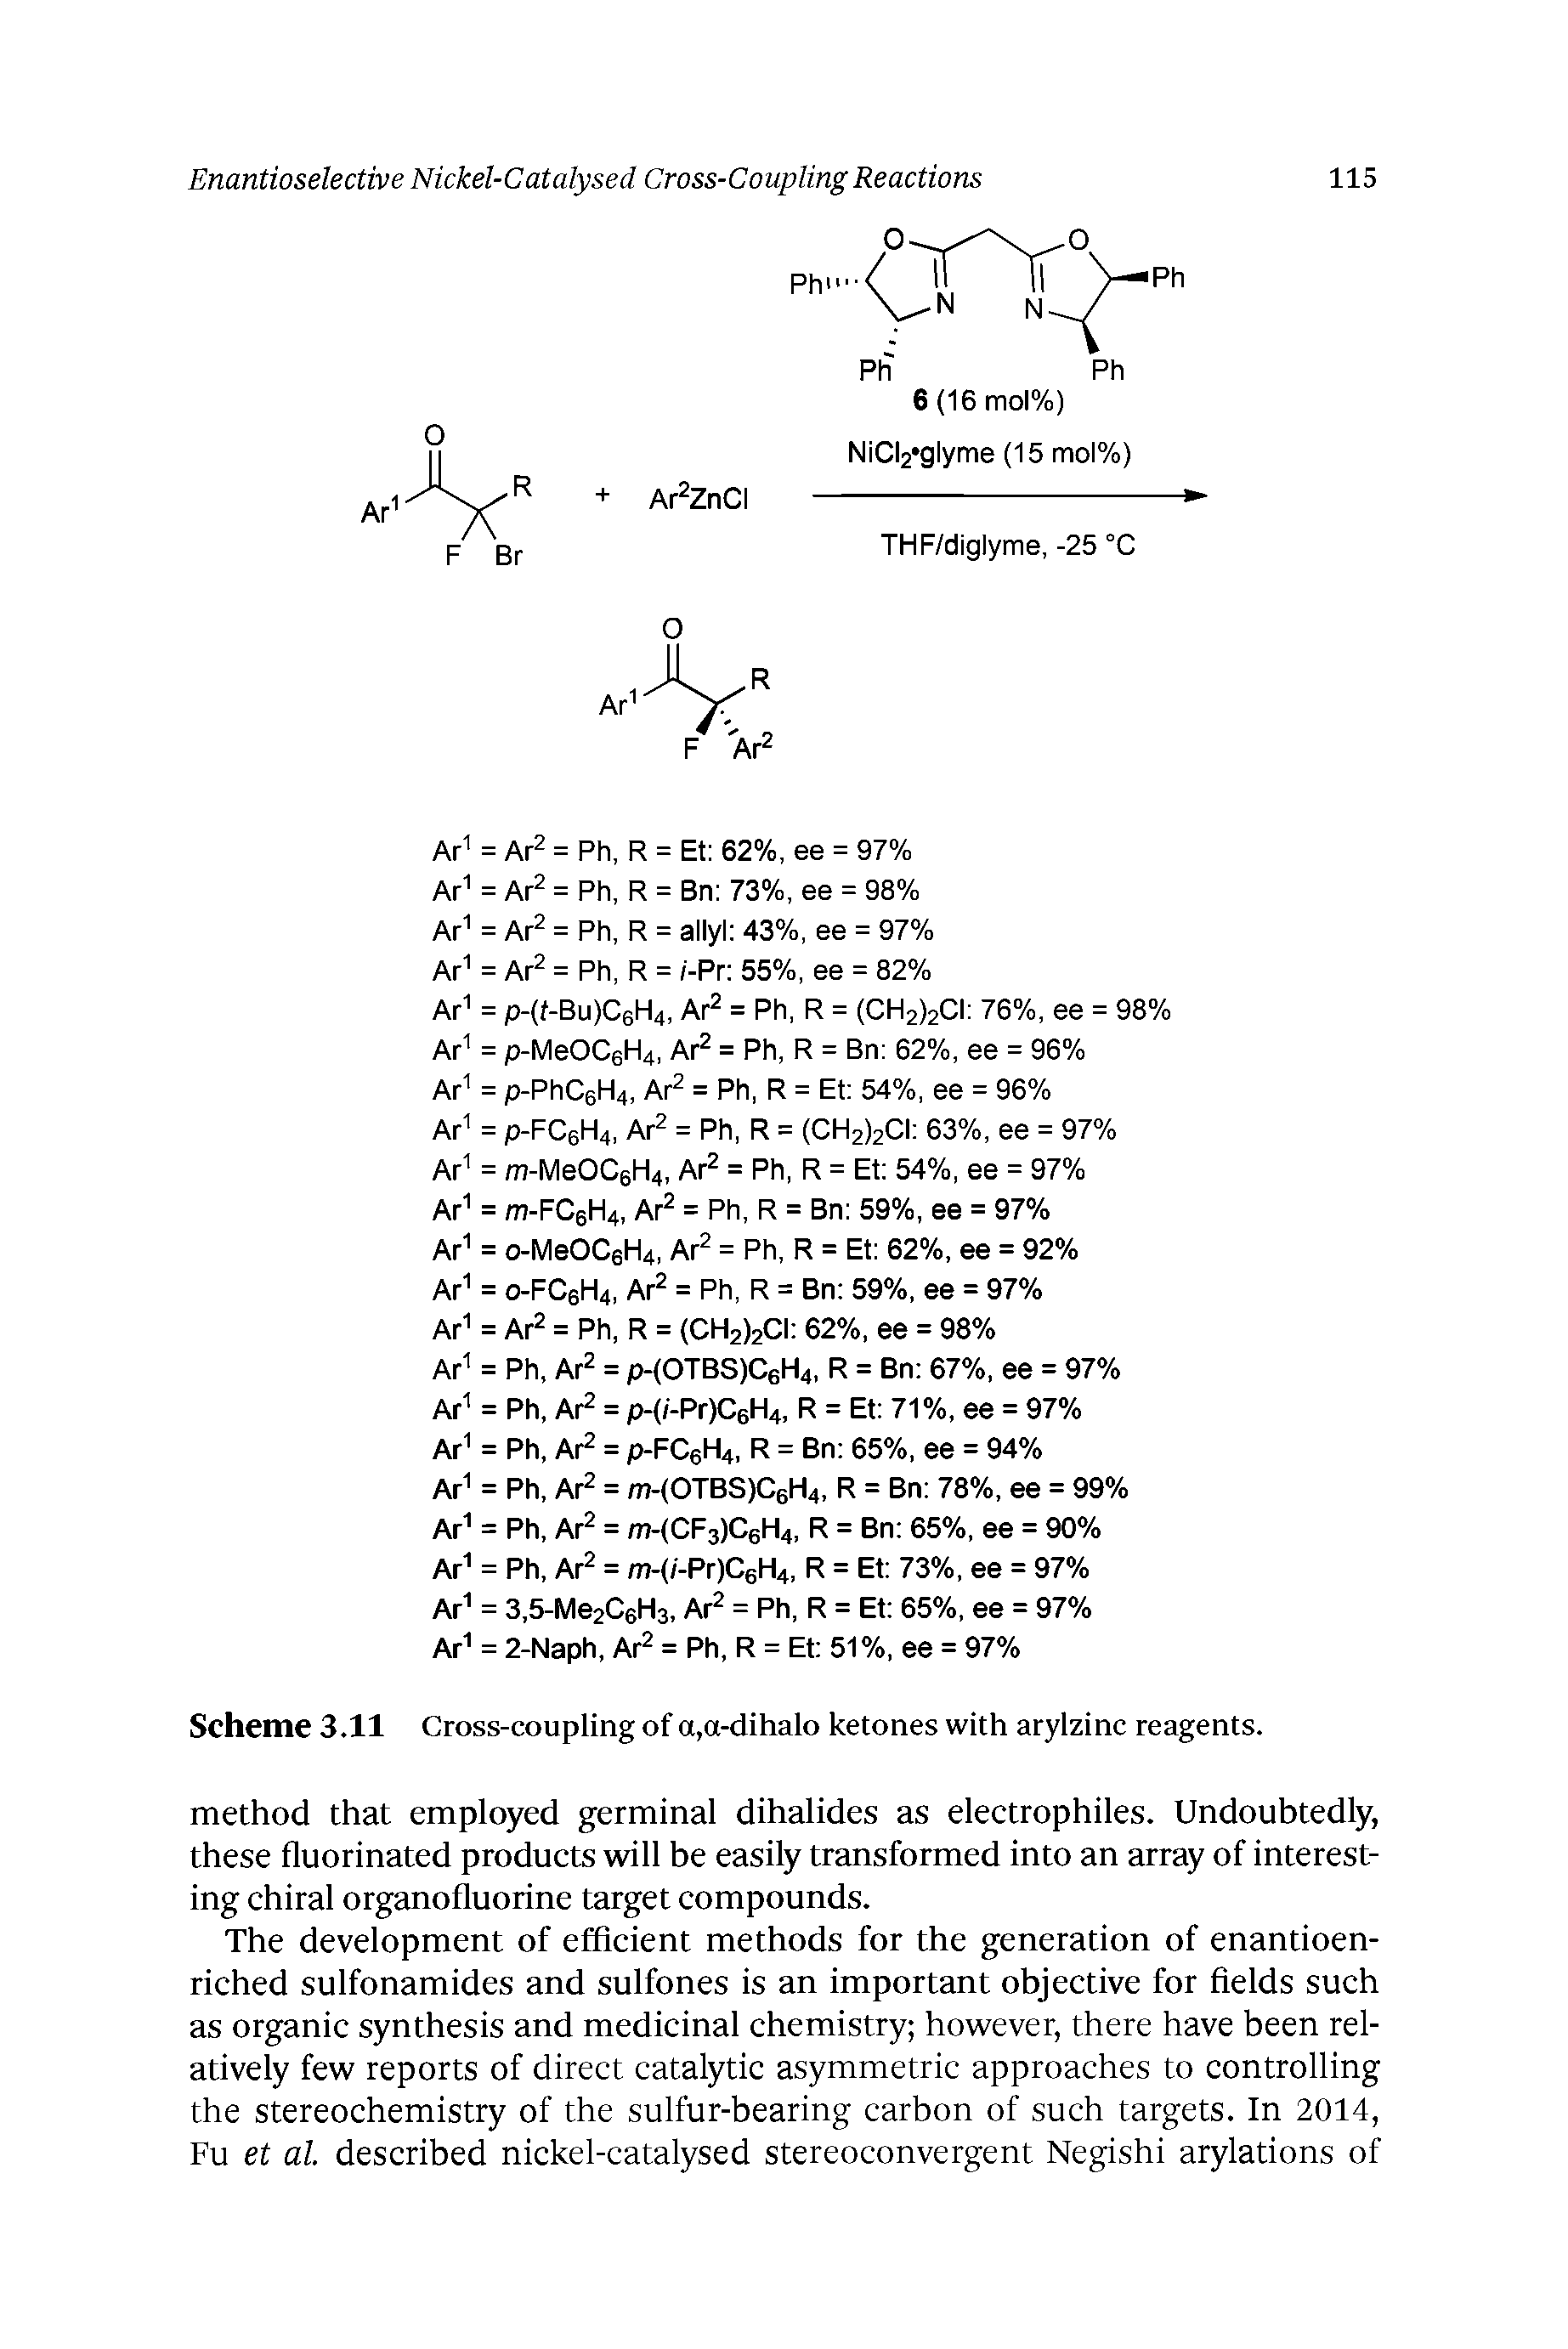 Scheme 3.11 Cross-coupling of a,a-dihalo ketones with arylzinc reagents.